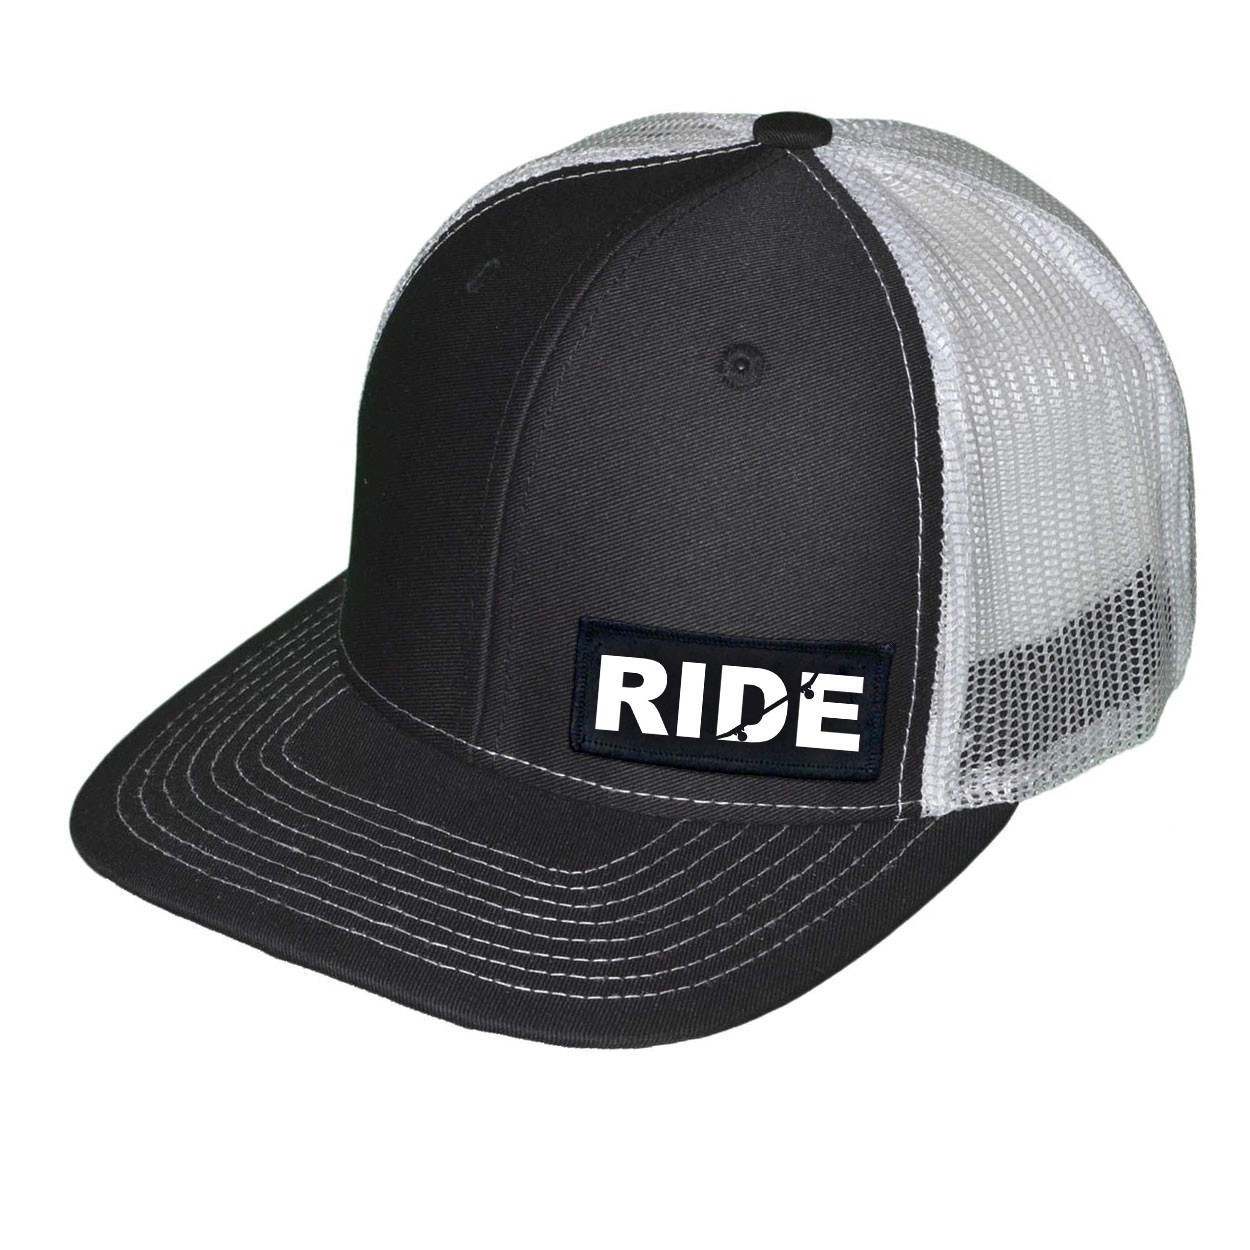 Ride Skateboard Logo Night Out Woven Patch Snapback Trucker Hat Black/White (White Logo)